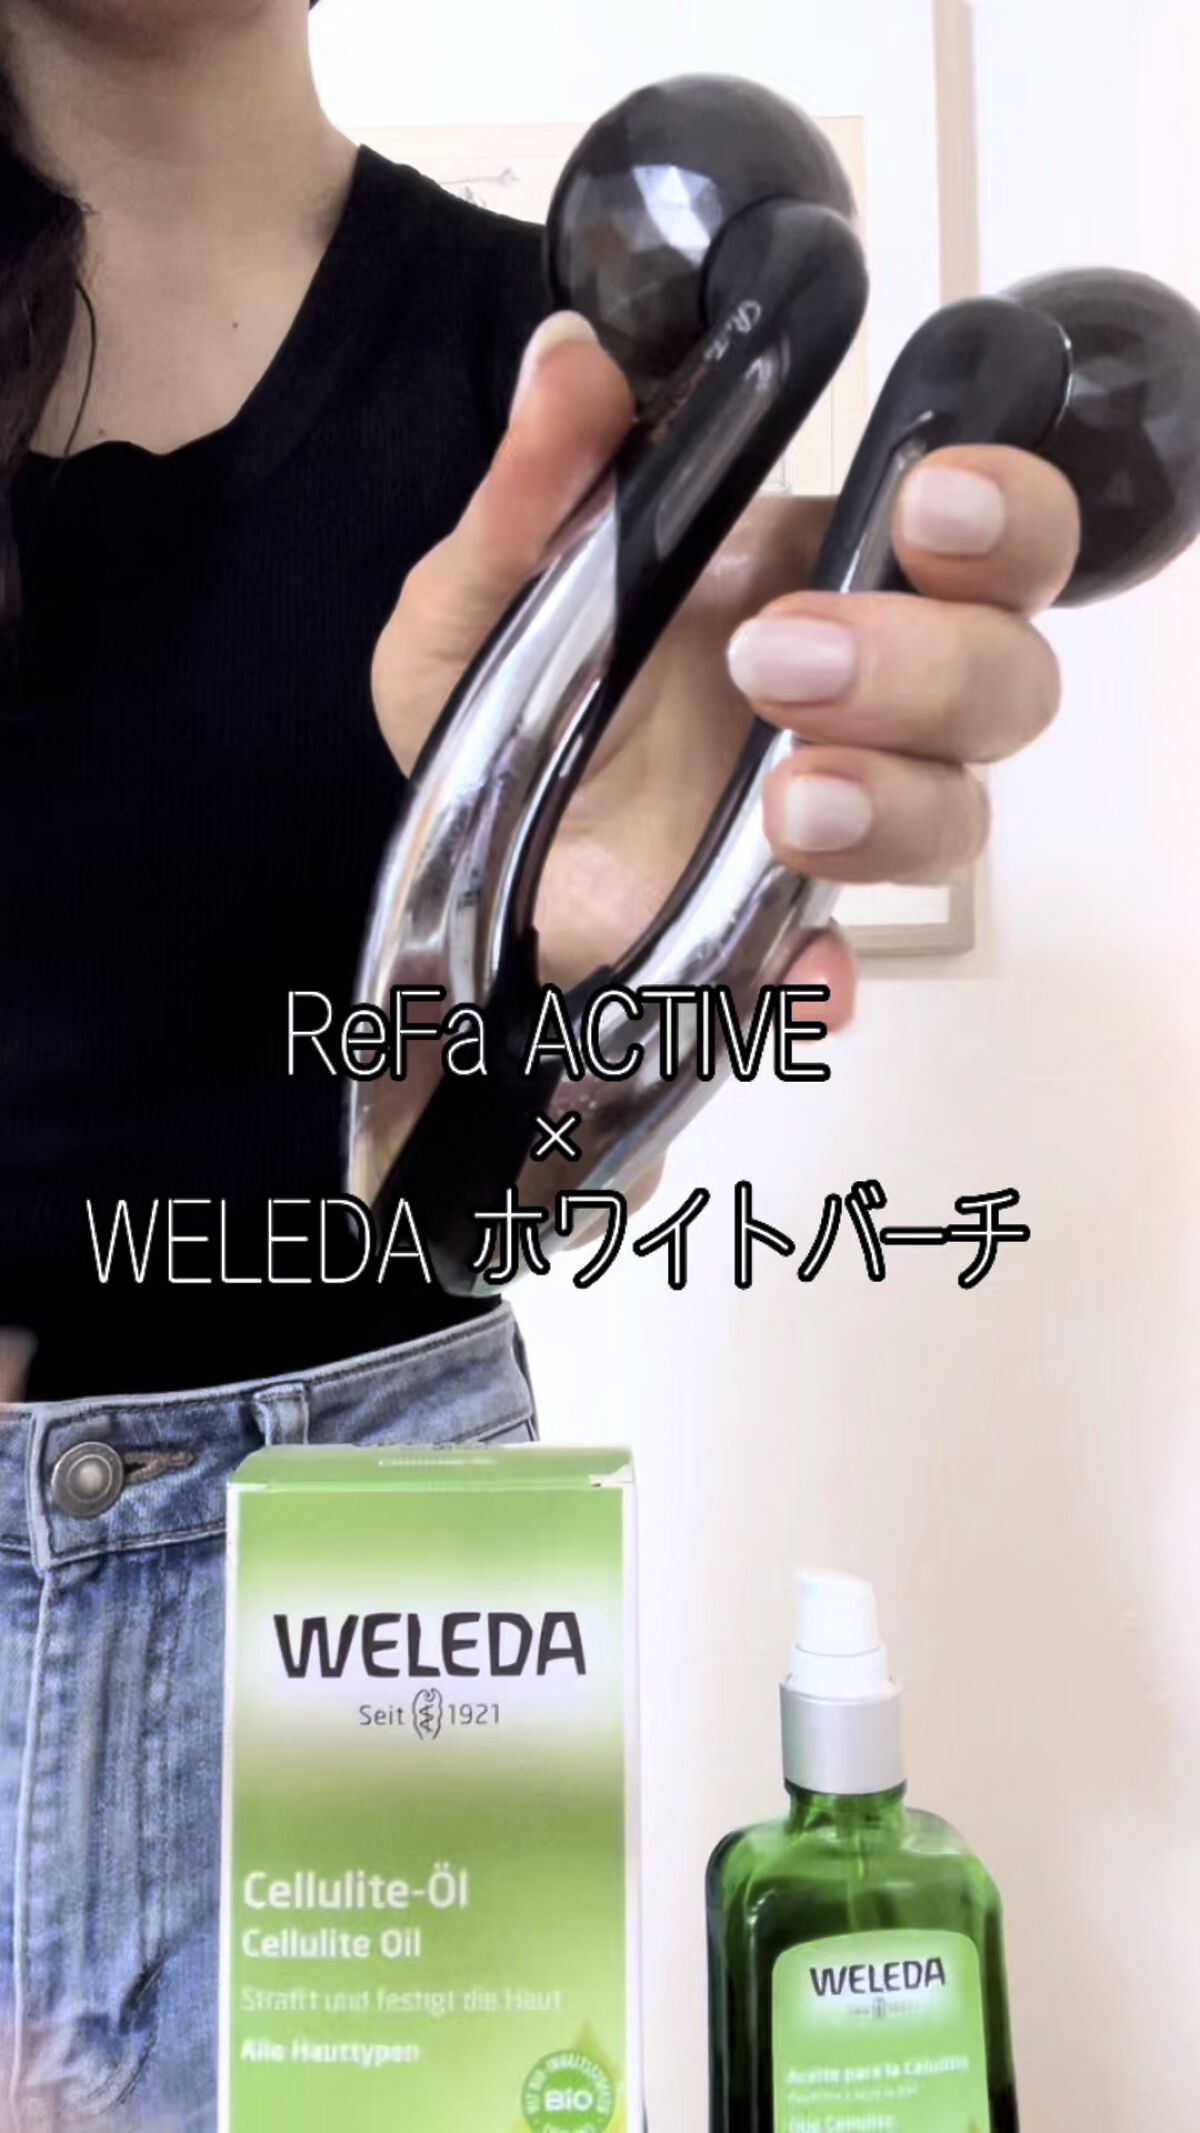 ReFa ACTIVE/ReFa/ボディケア美容家電の動画クチコミ1つ目